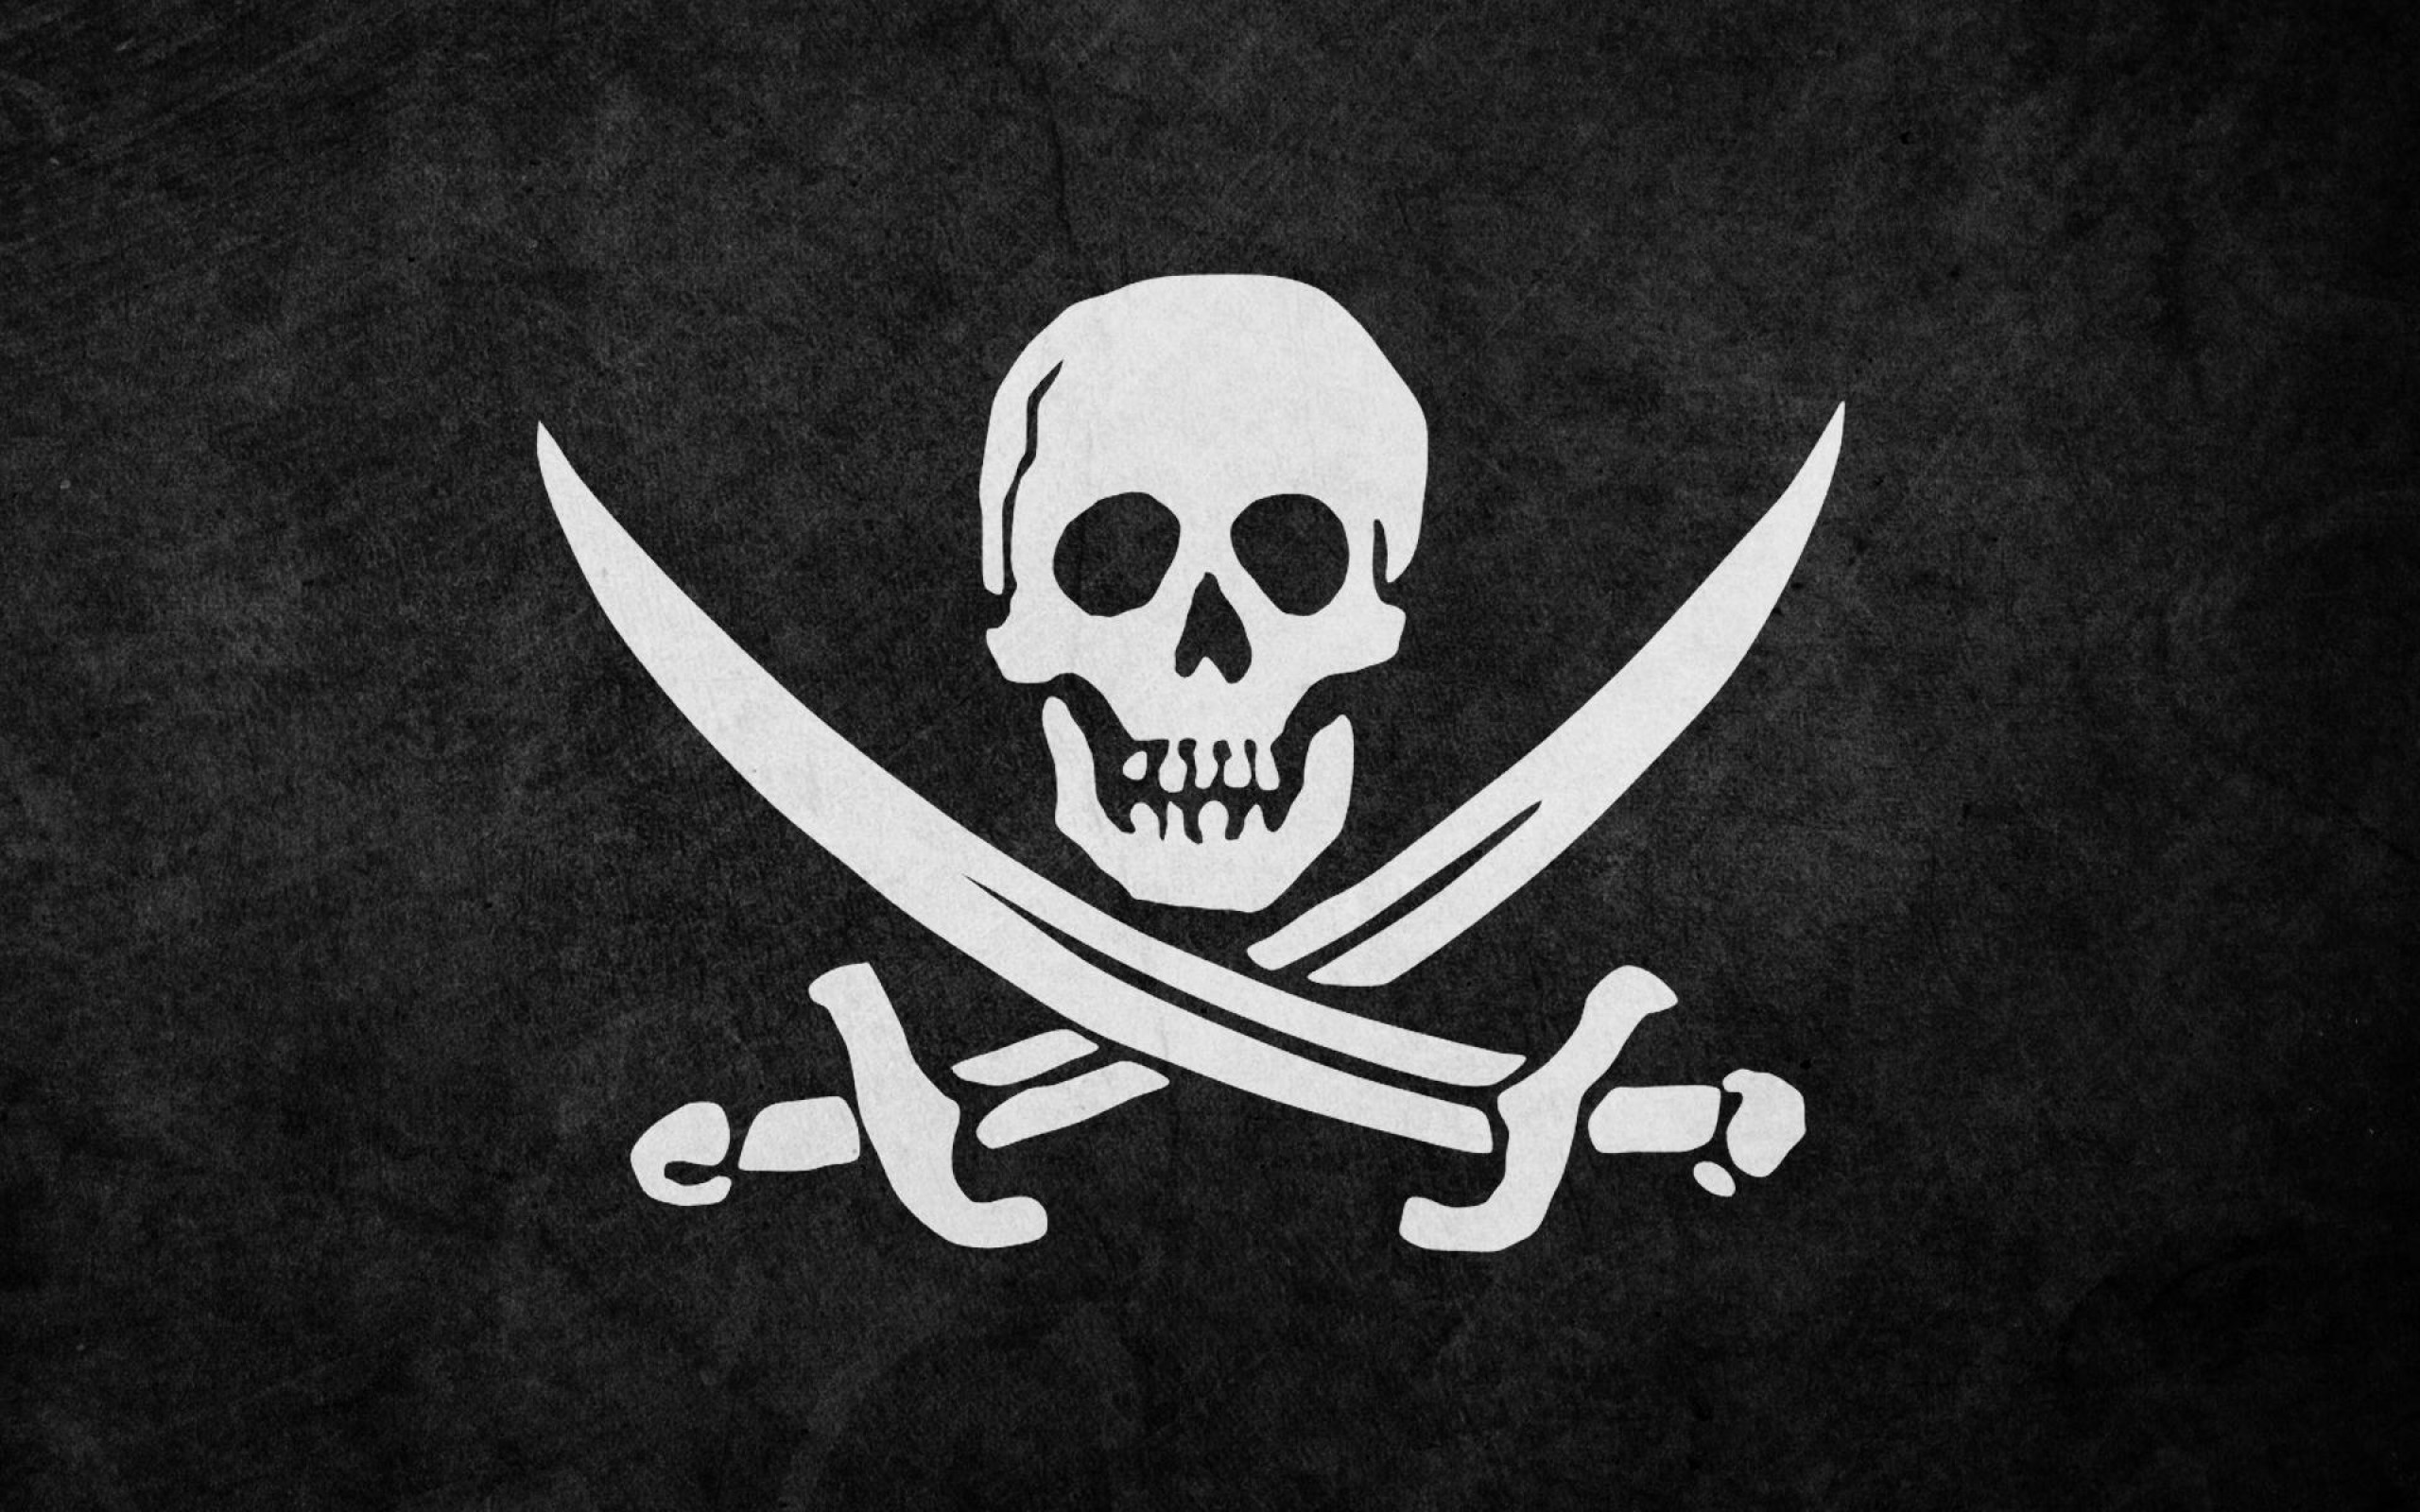 Pirate flag hd papers und hintergrãnde